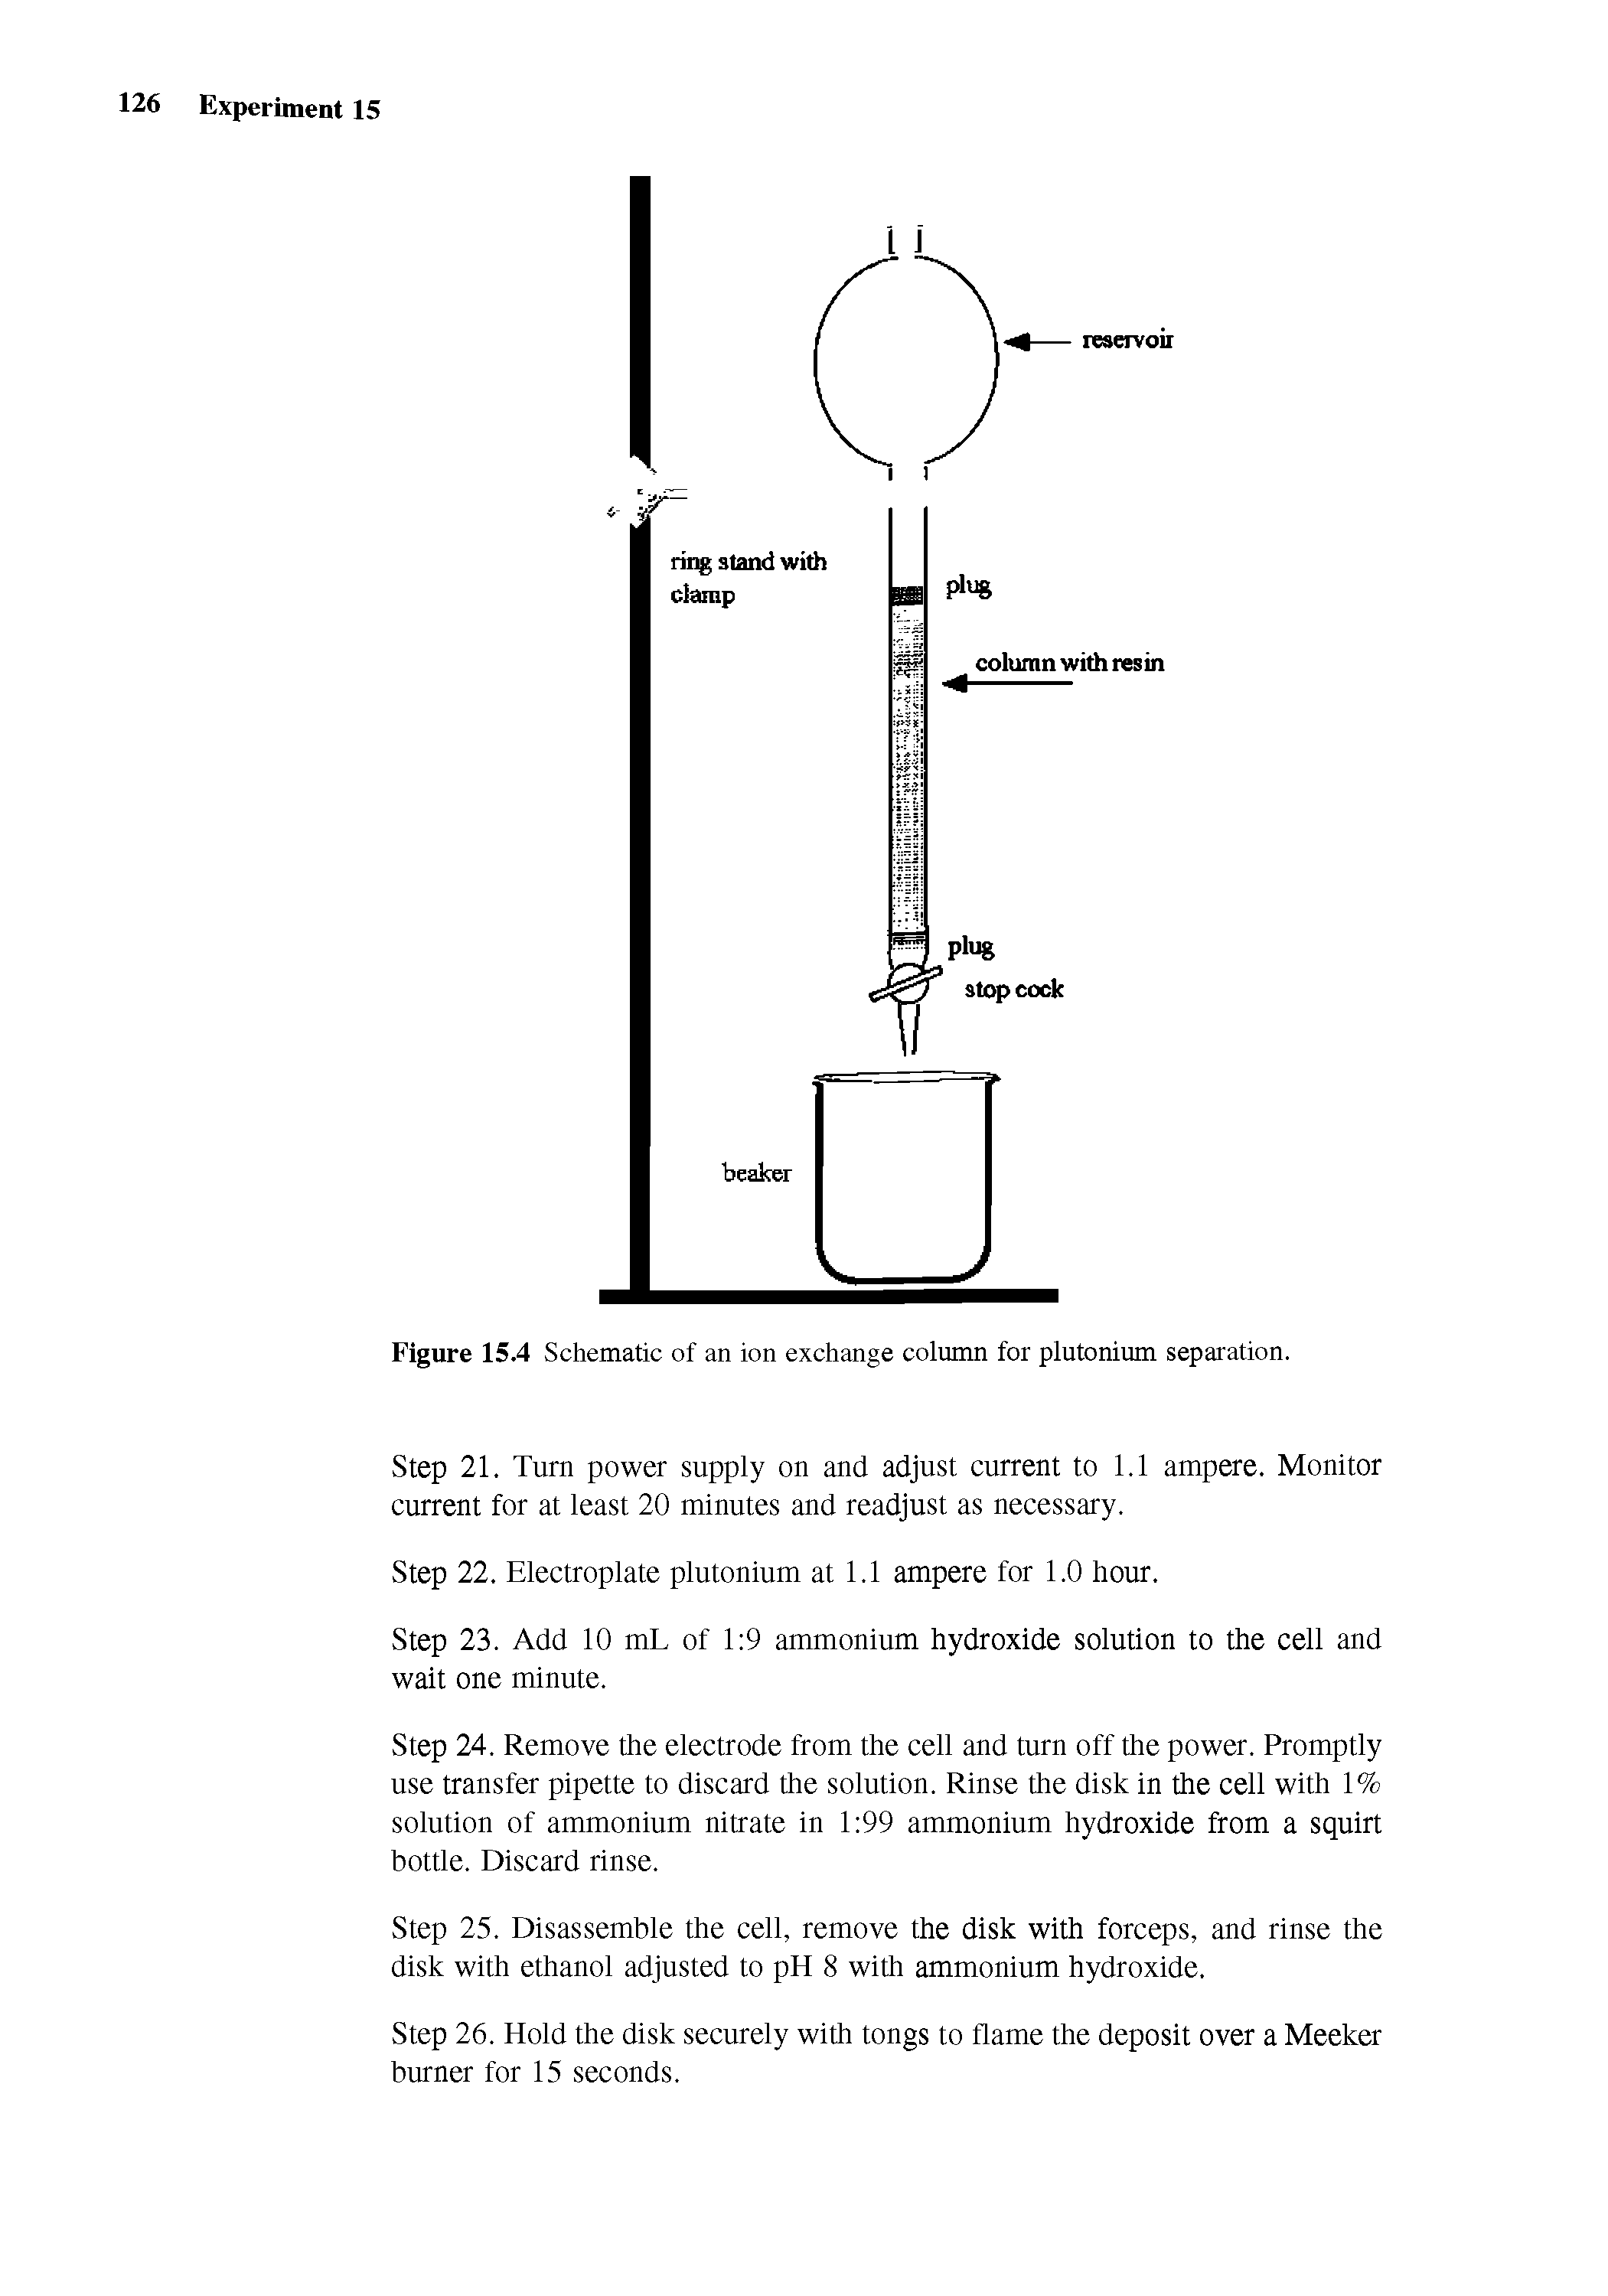 Figure 15.4 Schematic of an ion exchange column for plutonium separation.